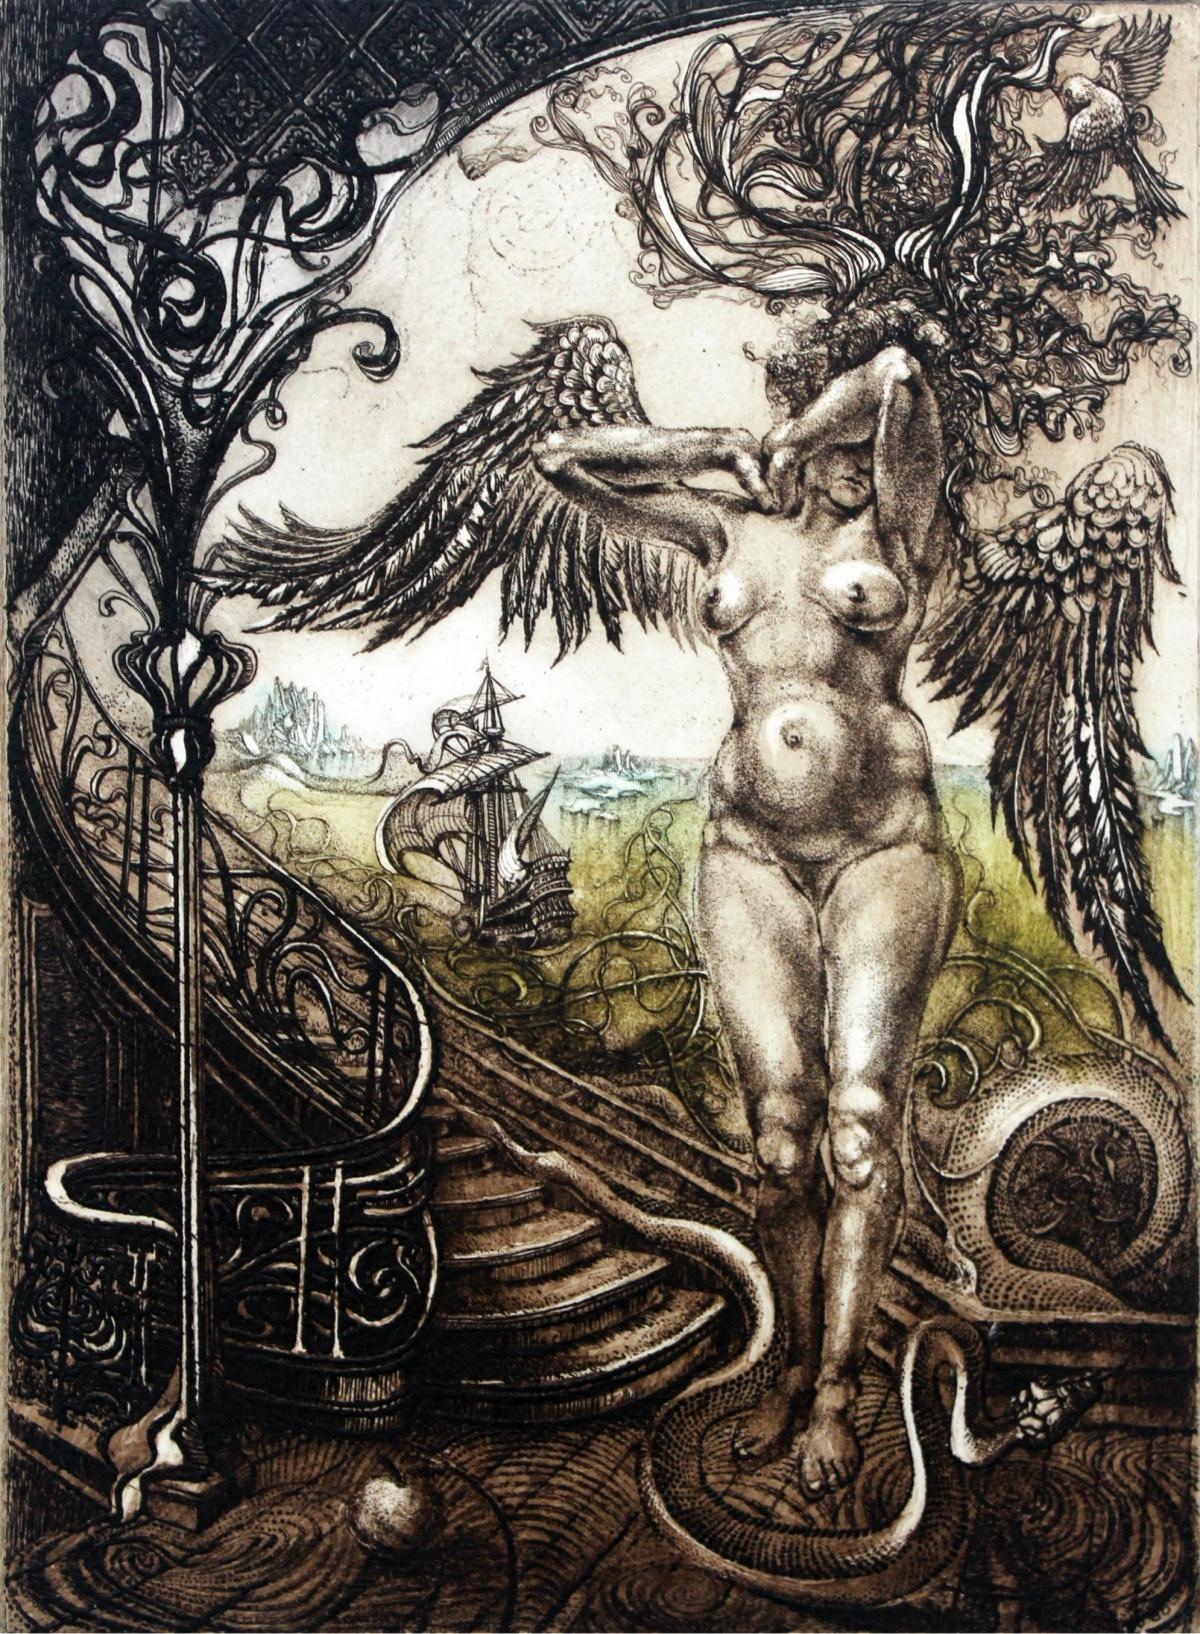 Barbara Rosiak Figurative Print - Temptation - XX Century, Figurative Etching Print, Nude, Landscape, Fantasy